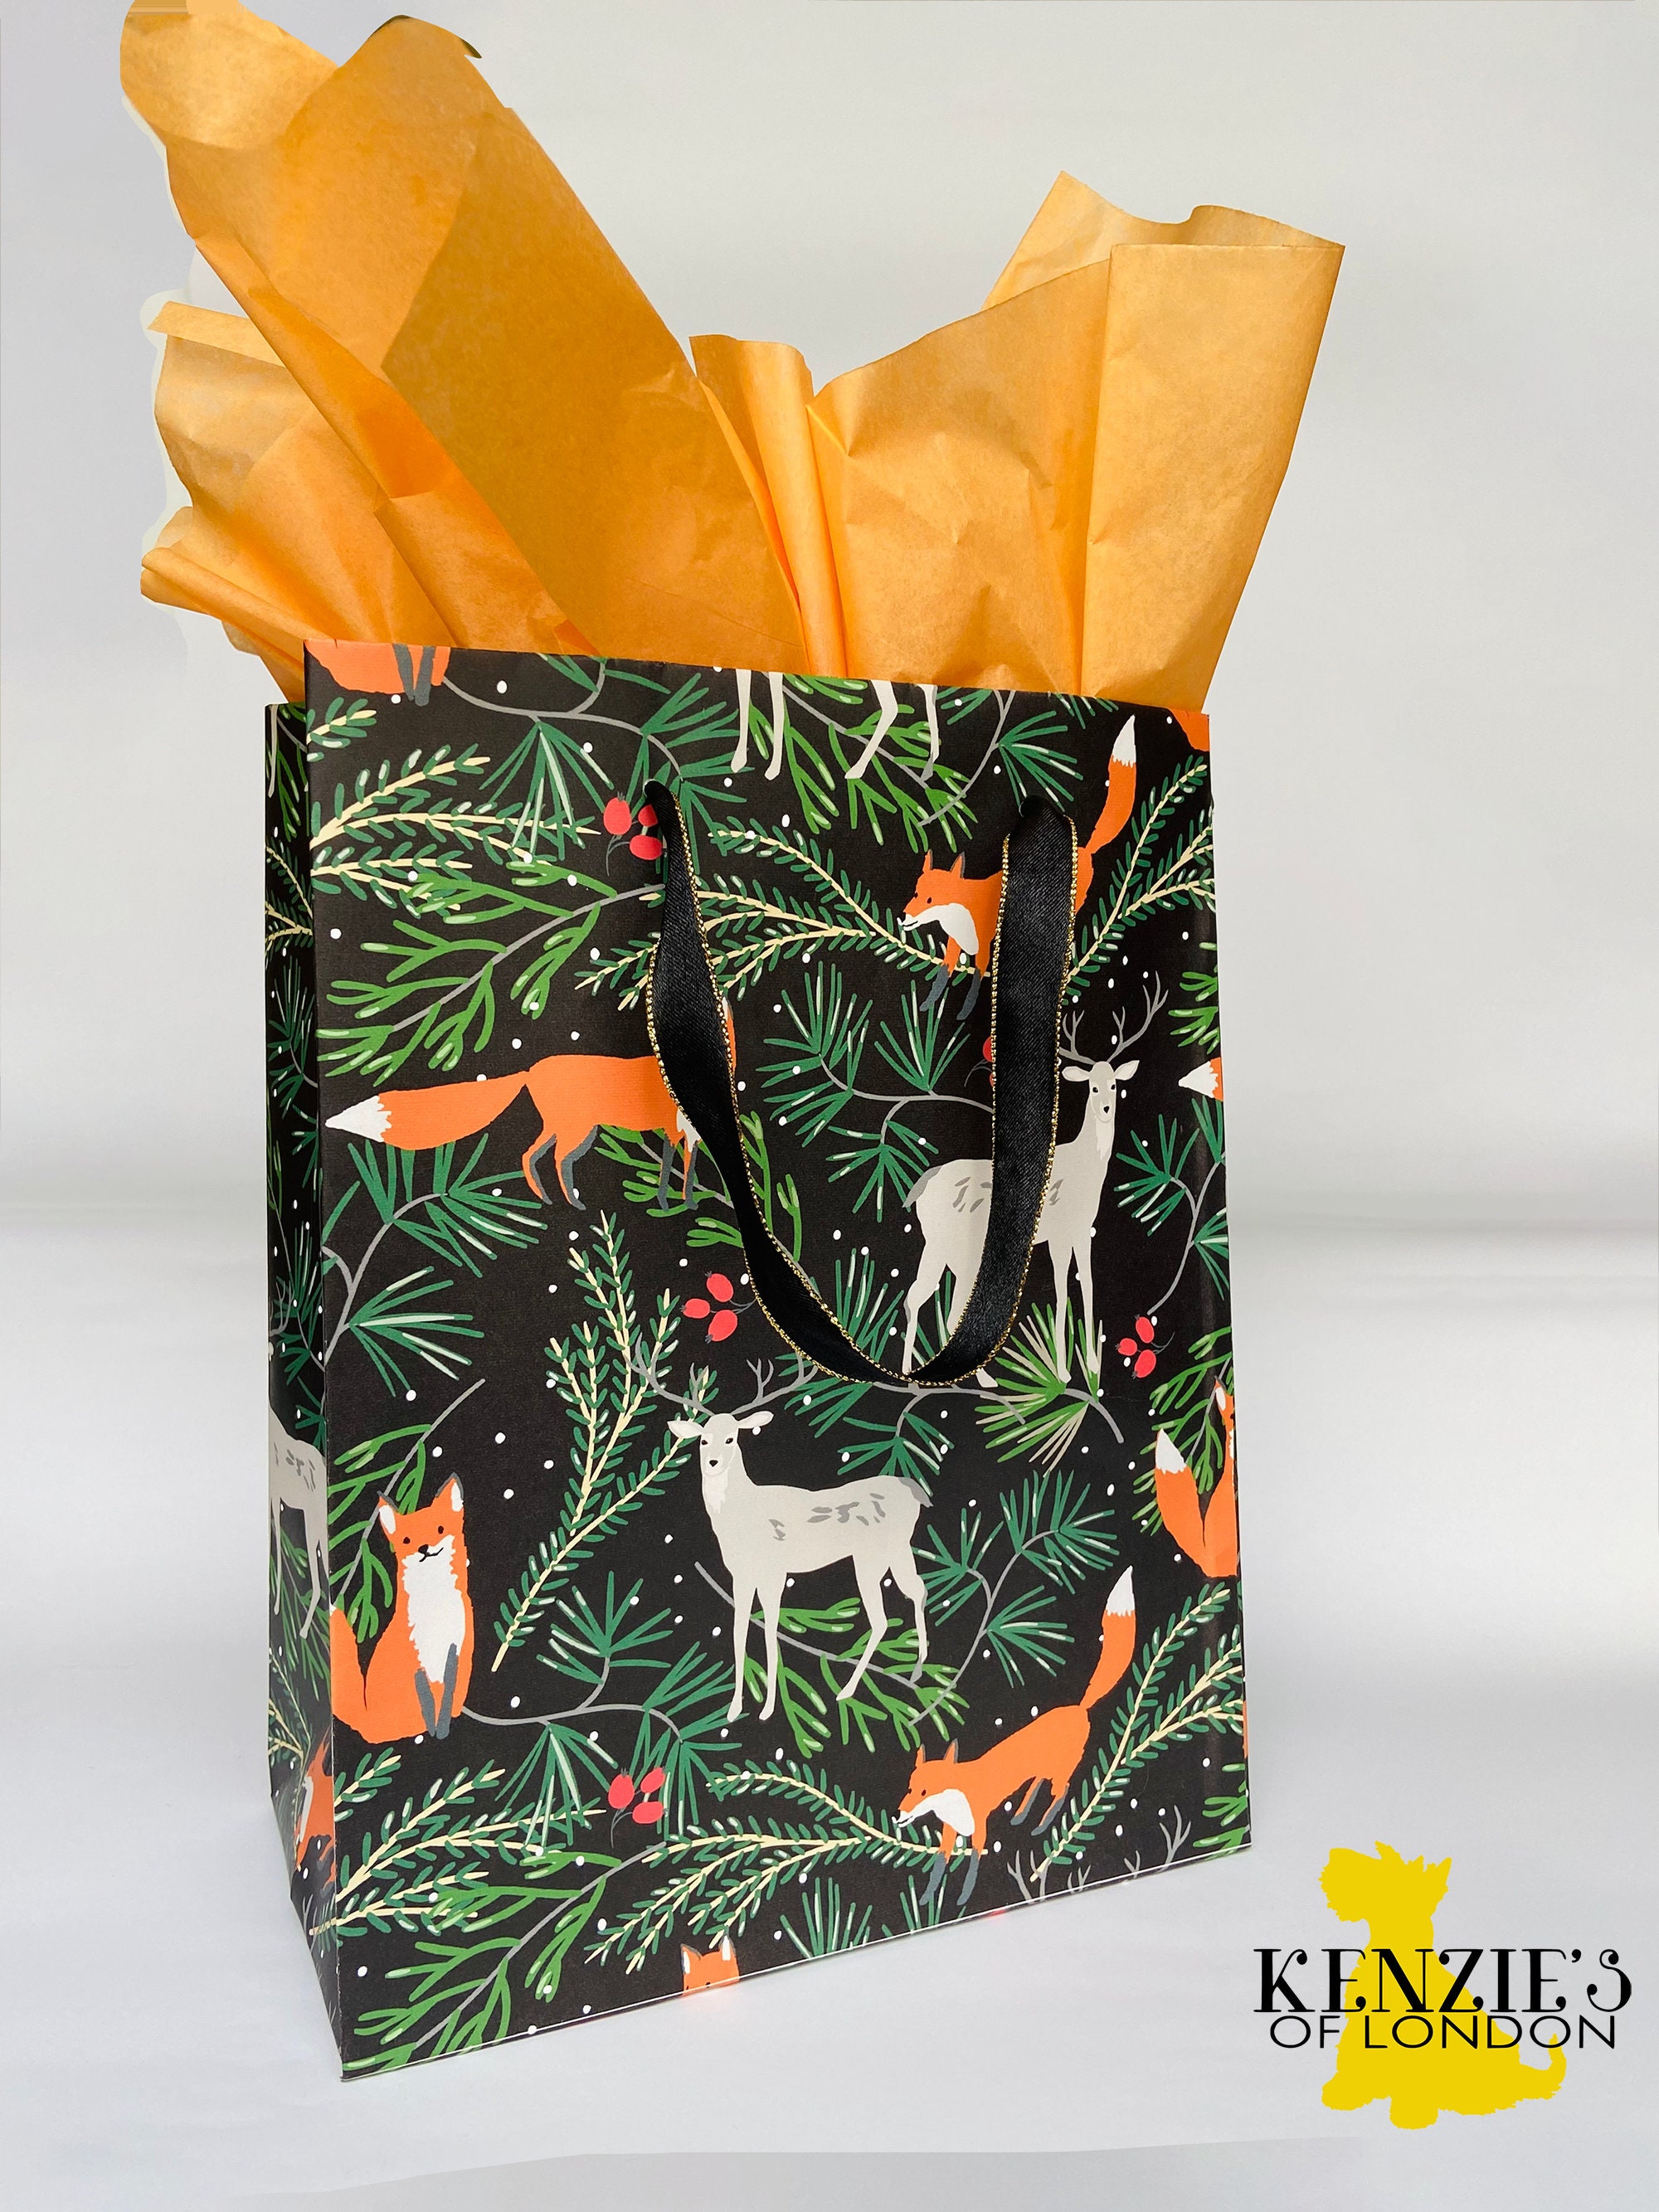 Tissue Paper Curlz Gift Bag Filler, 42-Inch - Rainbow